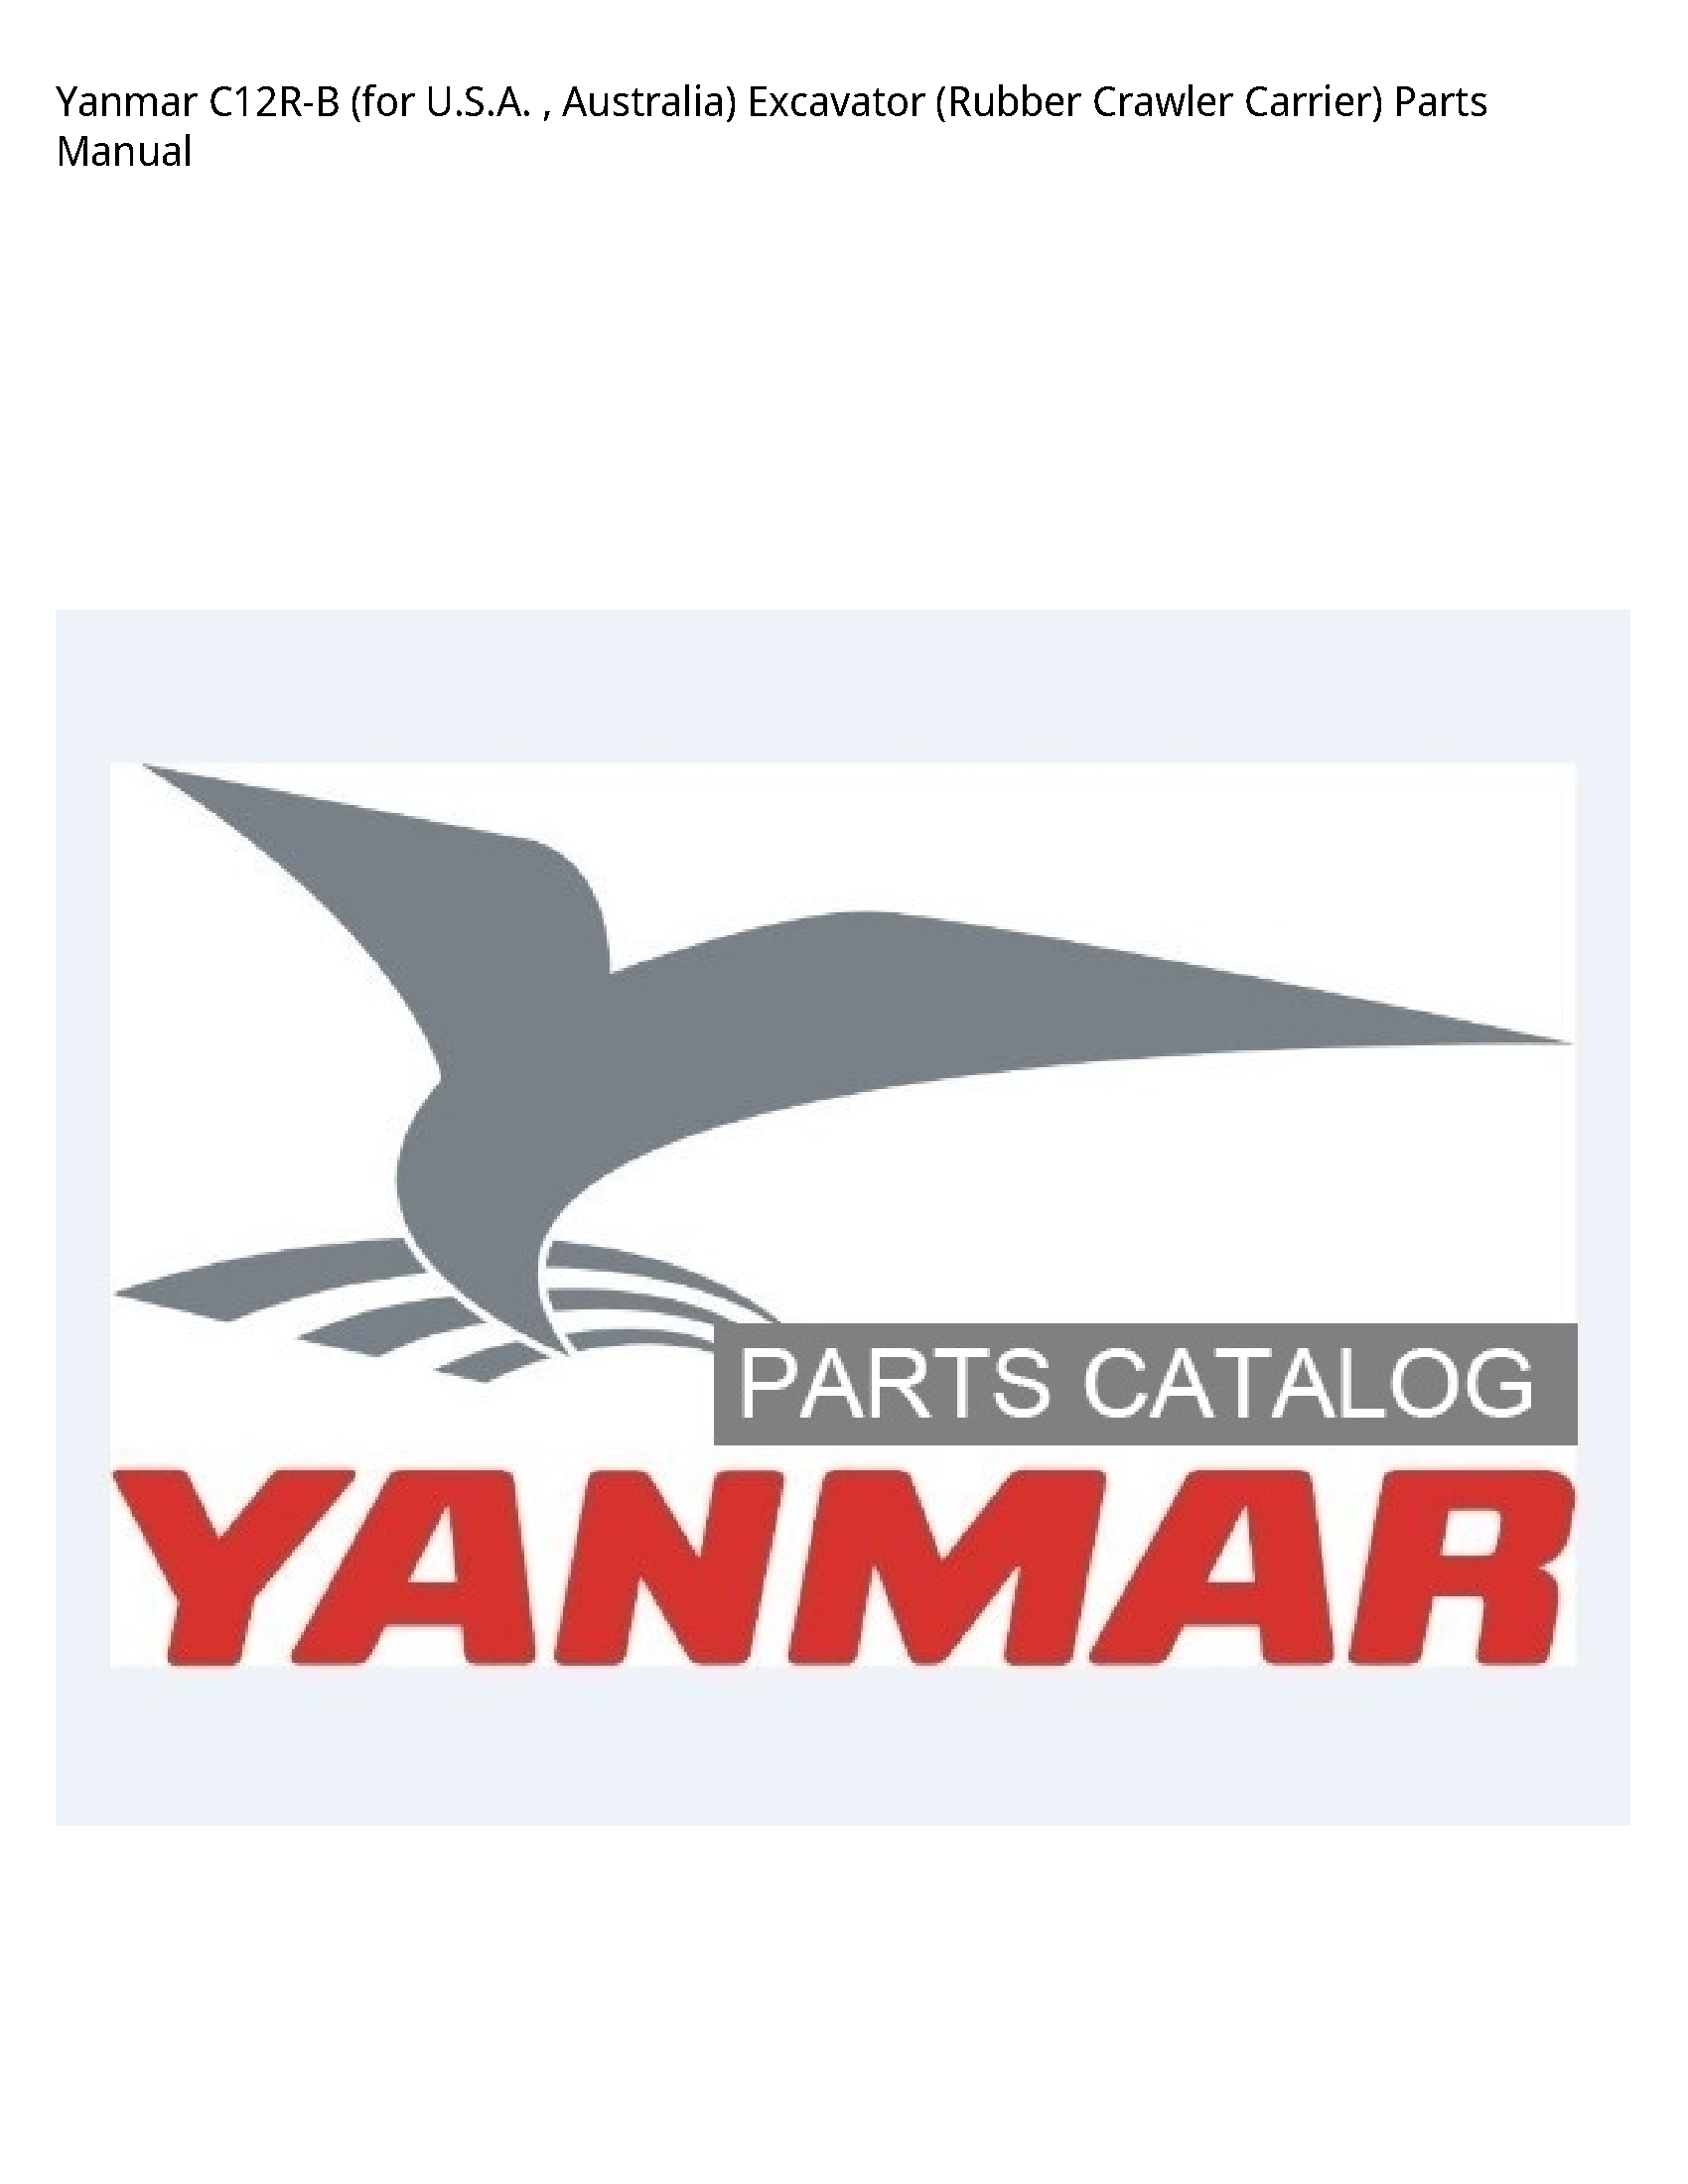 Yanmar C12R-B (for U.S.A. Australia) Excavator (Rubber Crawler Carrier) Parts manual